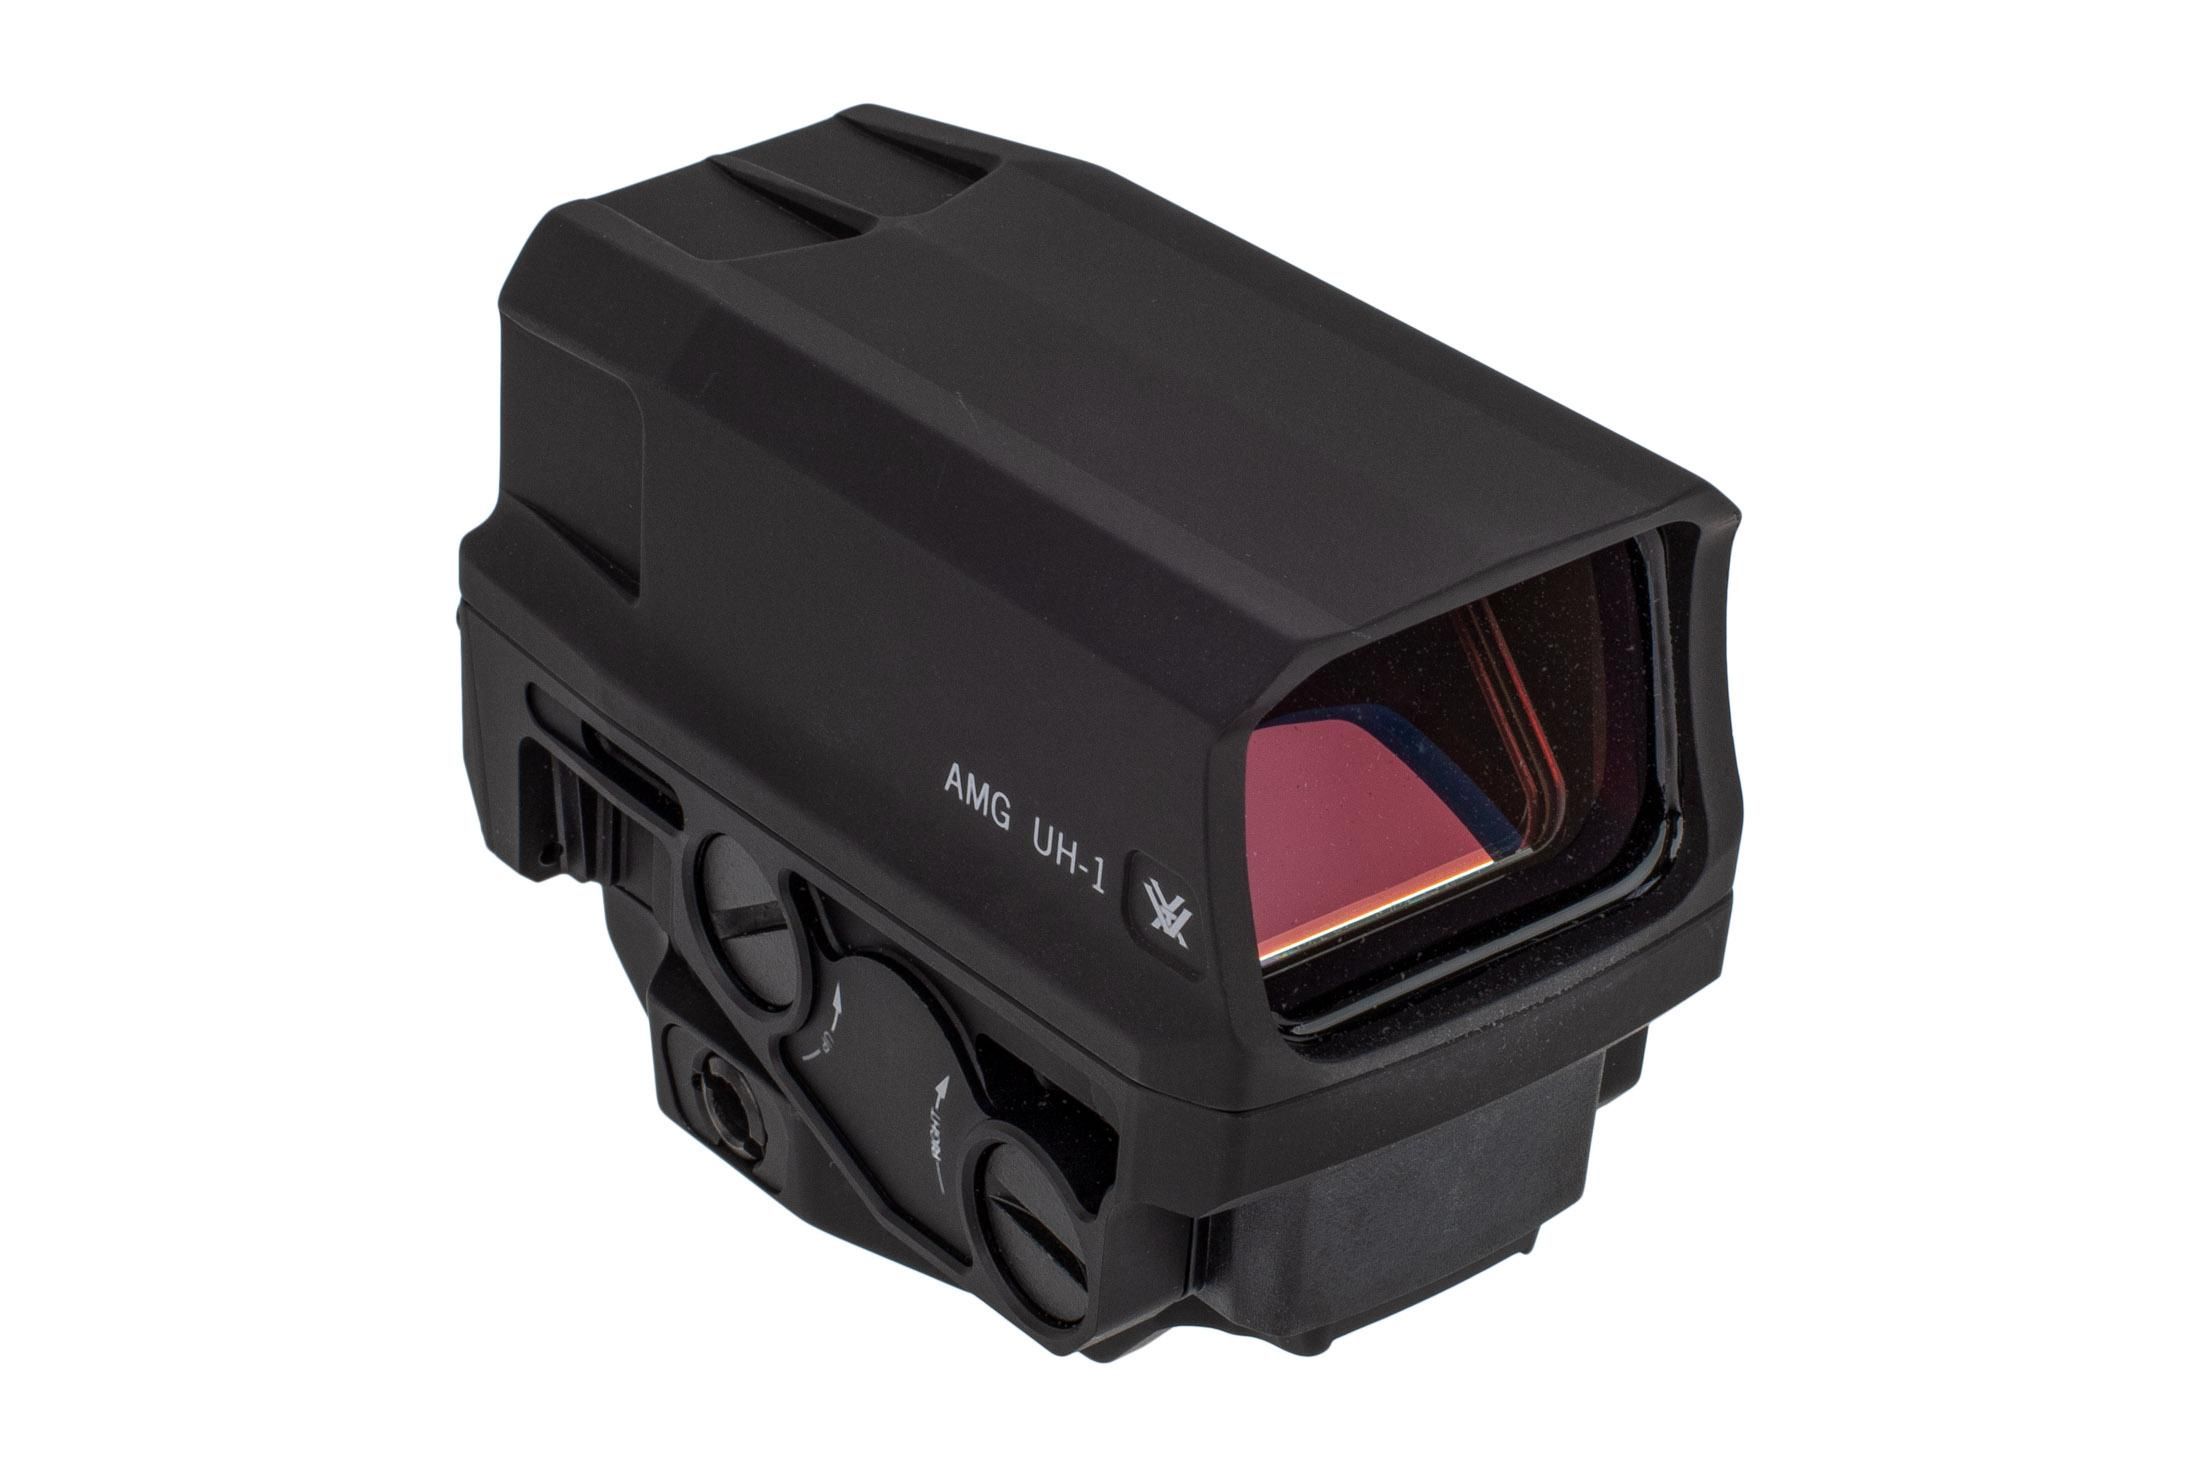 Vortex Optics AMG UH-1 Gen II Holographic Sight